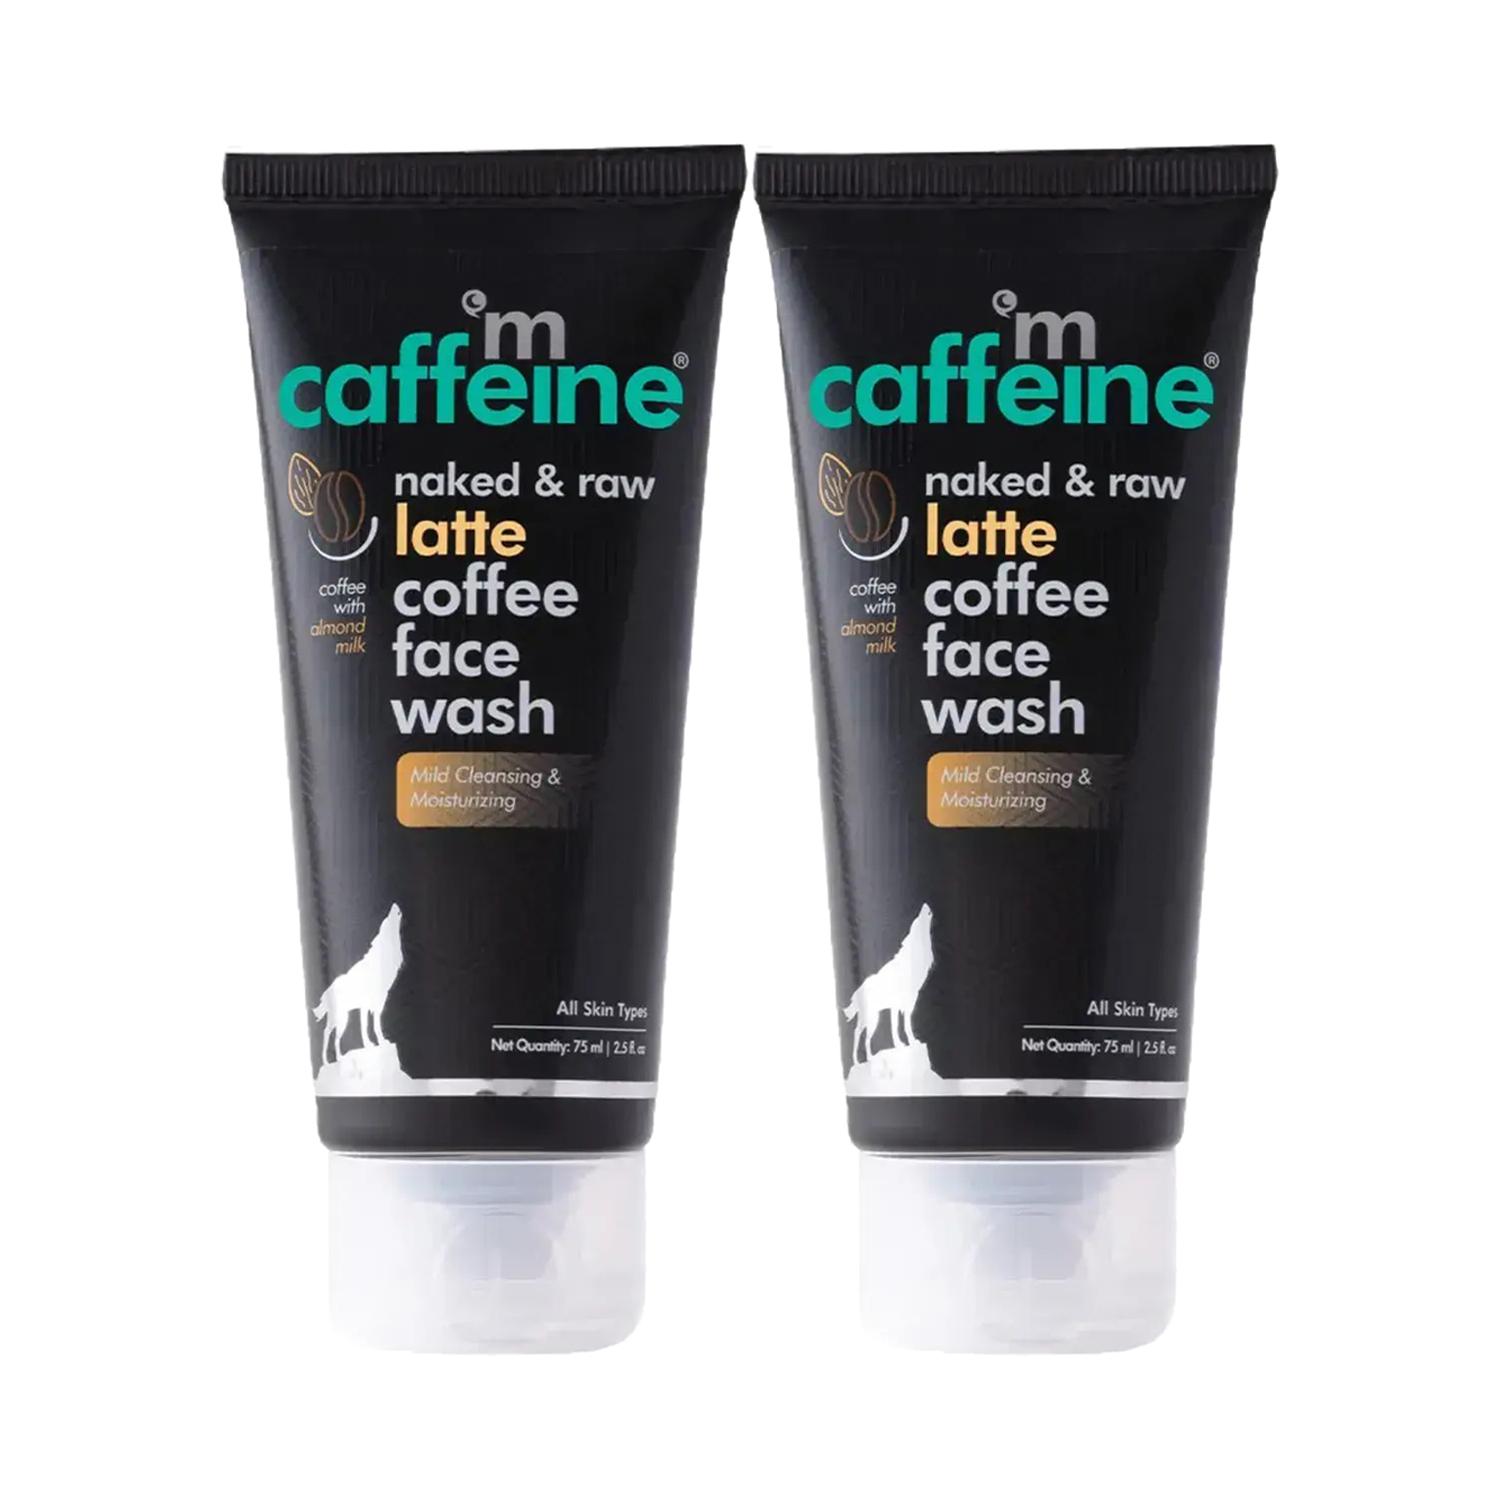 mCaffeine | mCaffeine Coffee & Milk Deep Cleanse Face Wash for Men & Women Glowing Skin Fights Acne Combo